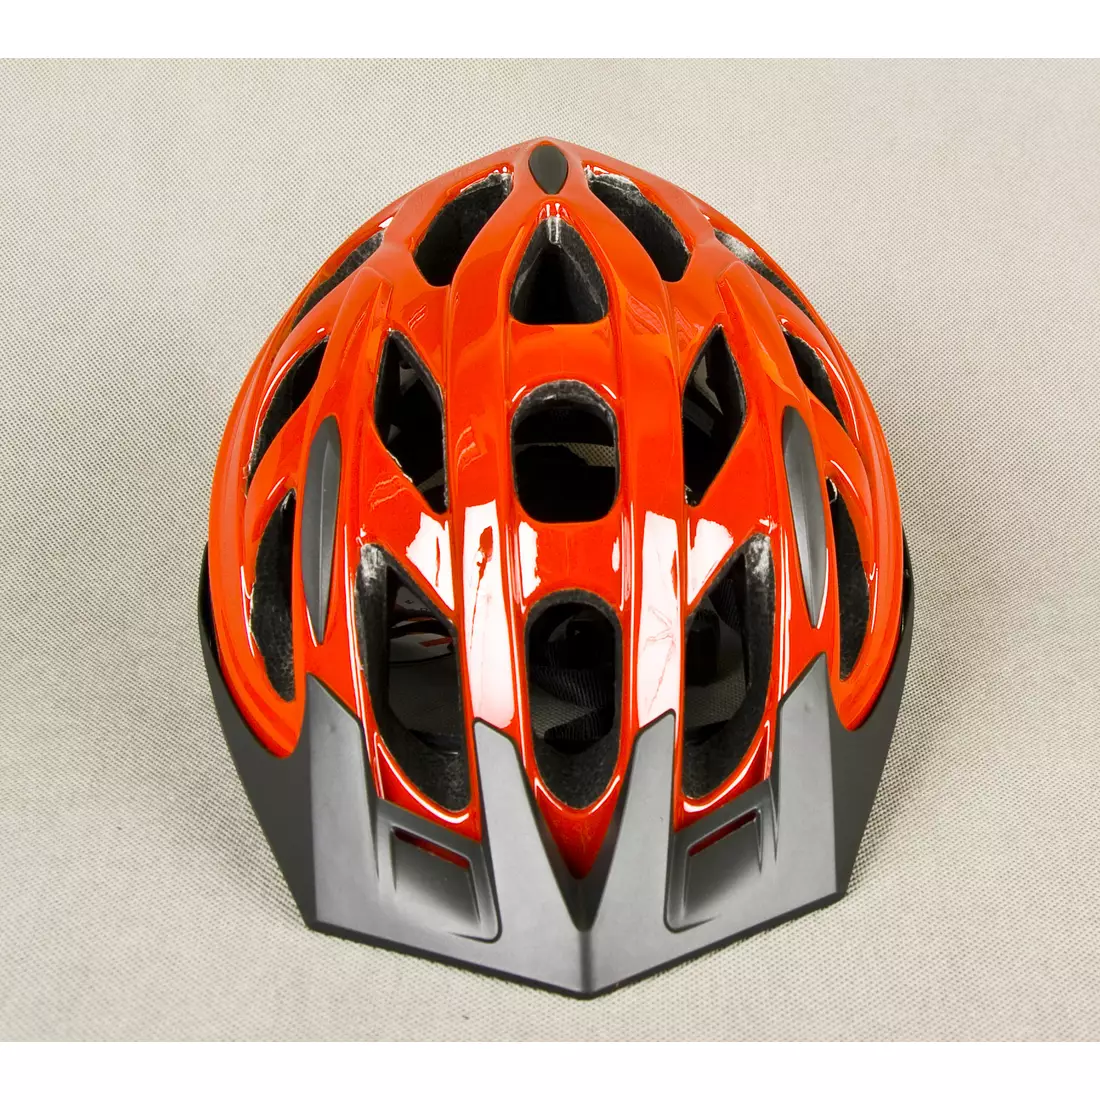 Casca de bicicleta LAZER - CYCLONE MTB, culoare: rosu